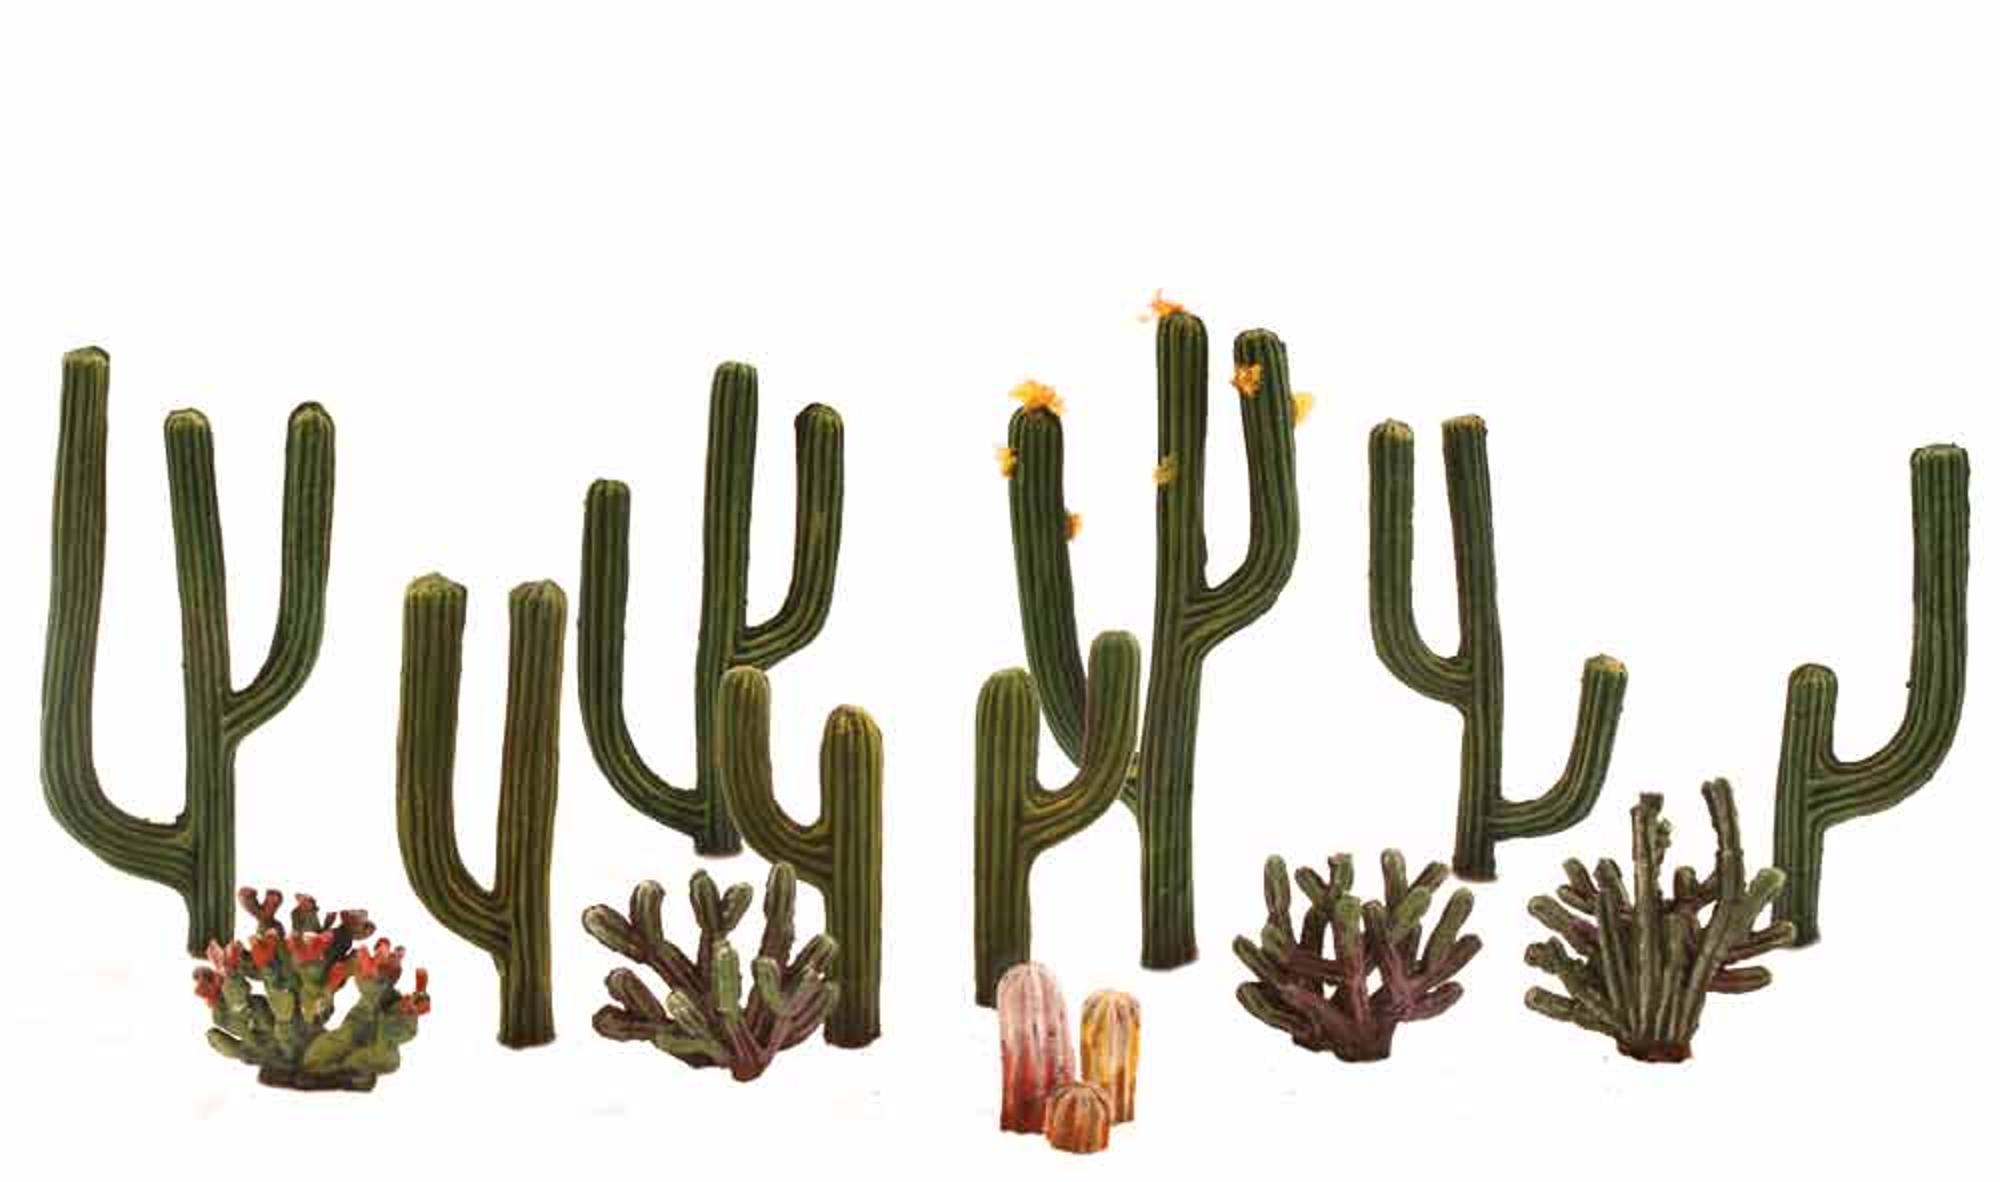 Woodland Scenics Cactus Plants (.5-2.5in, 13 pc)